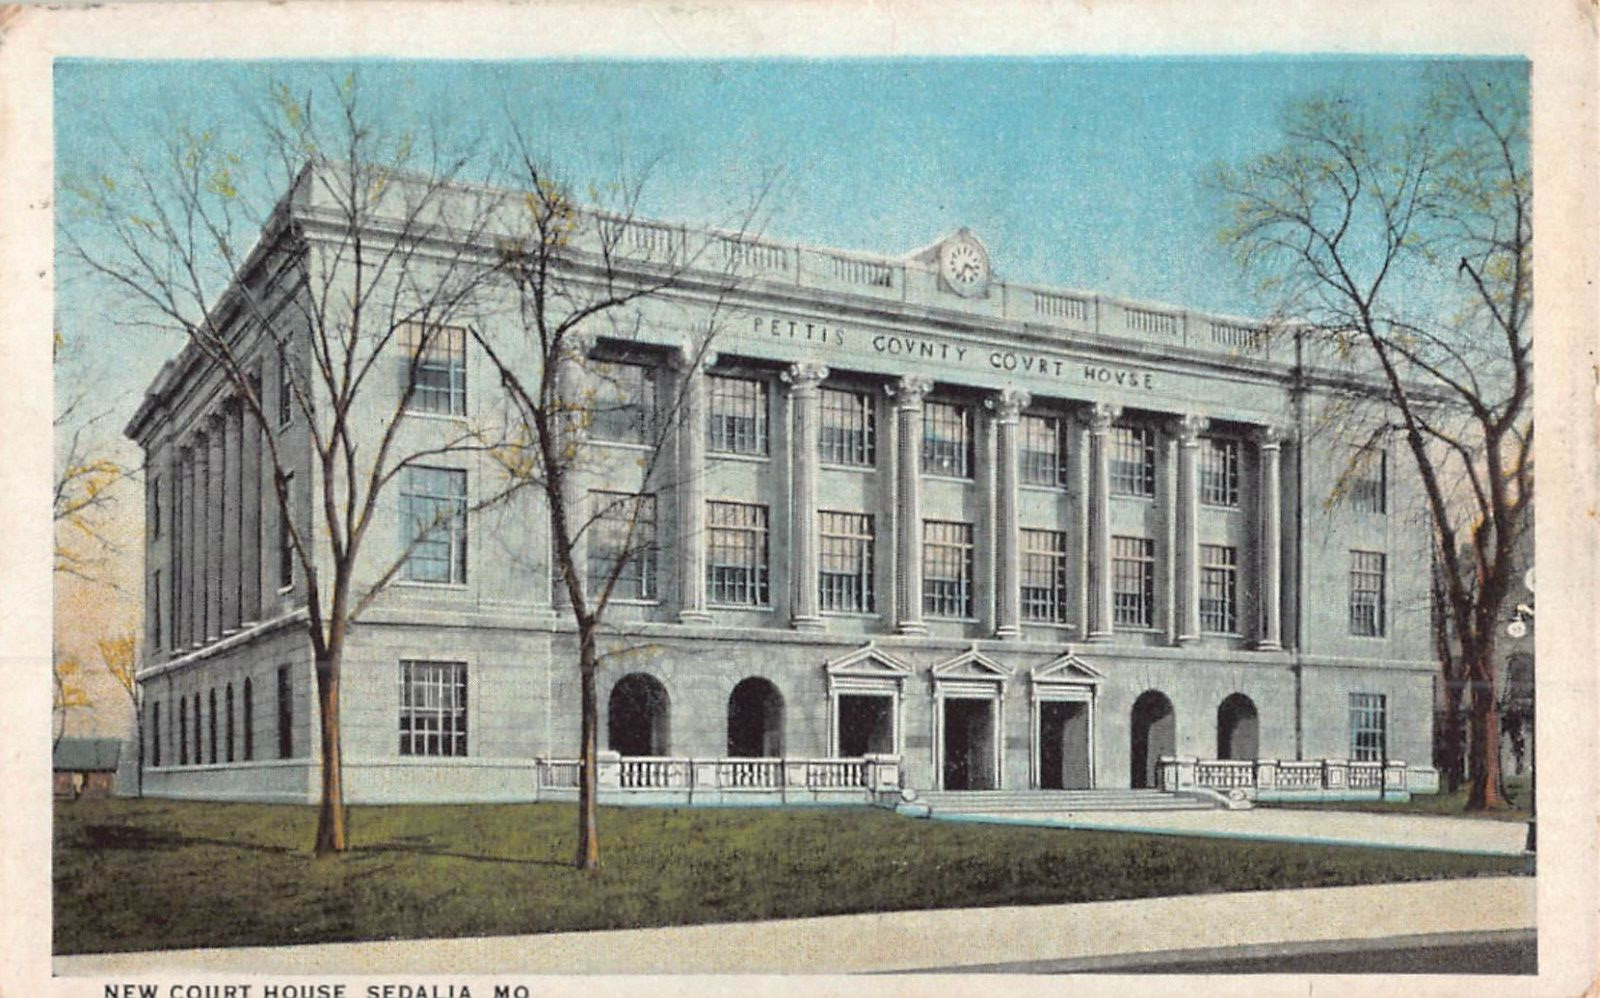 1925 Postcard of the New Pettis County Court House, Sedalia, Missouri